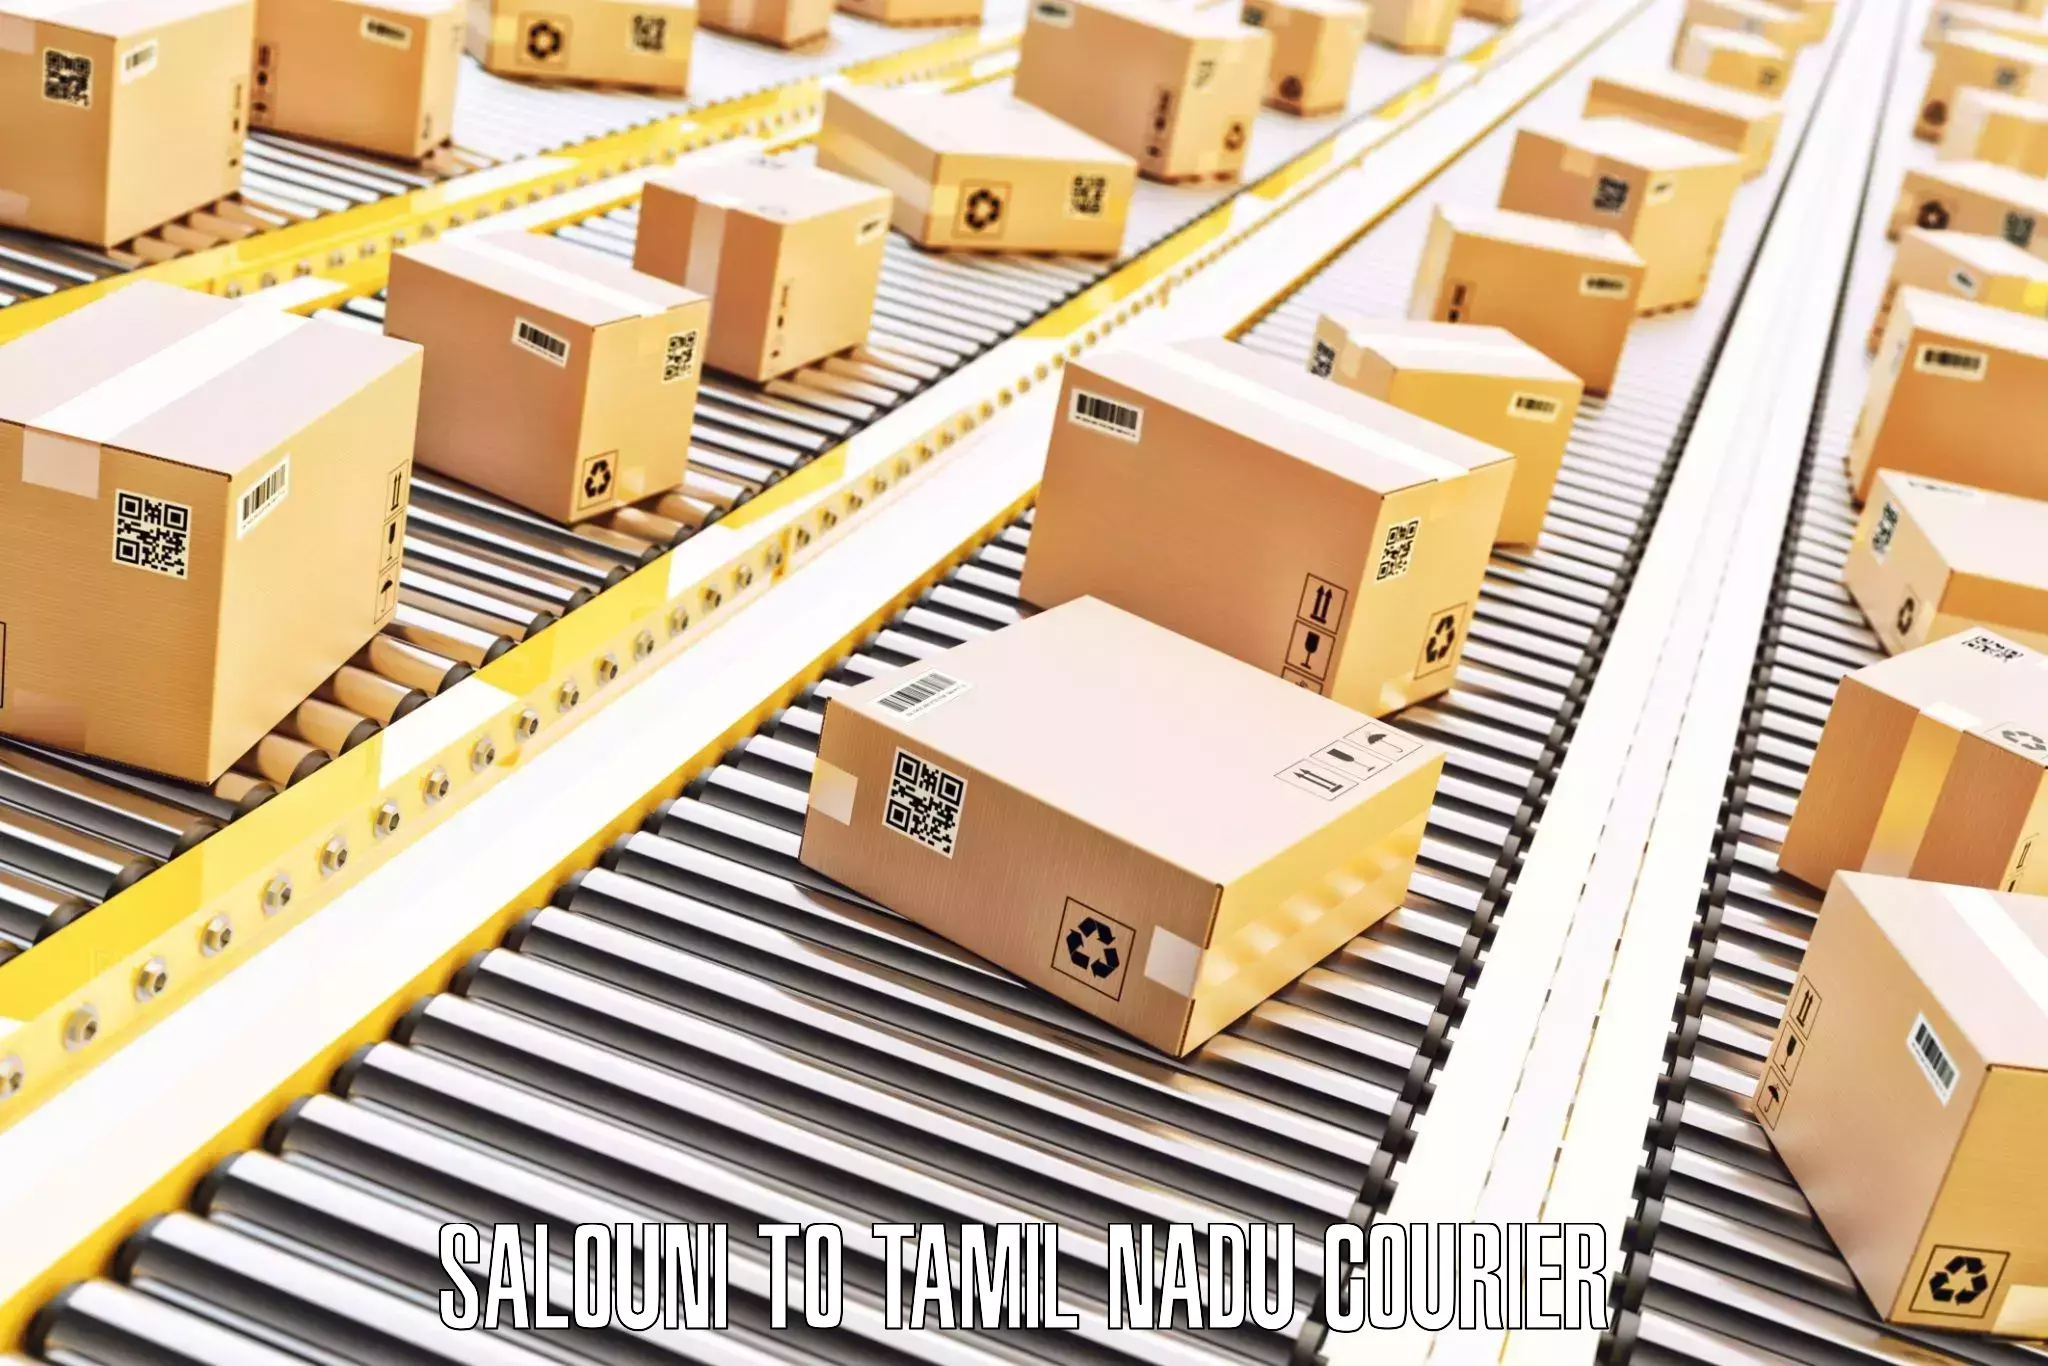 Luggage forwarding service Salouni to Tamil Nadu